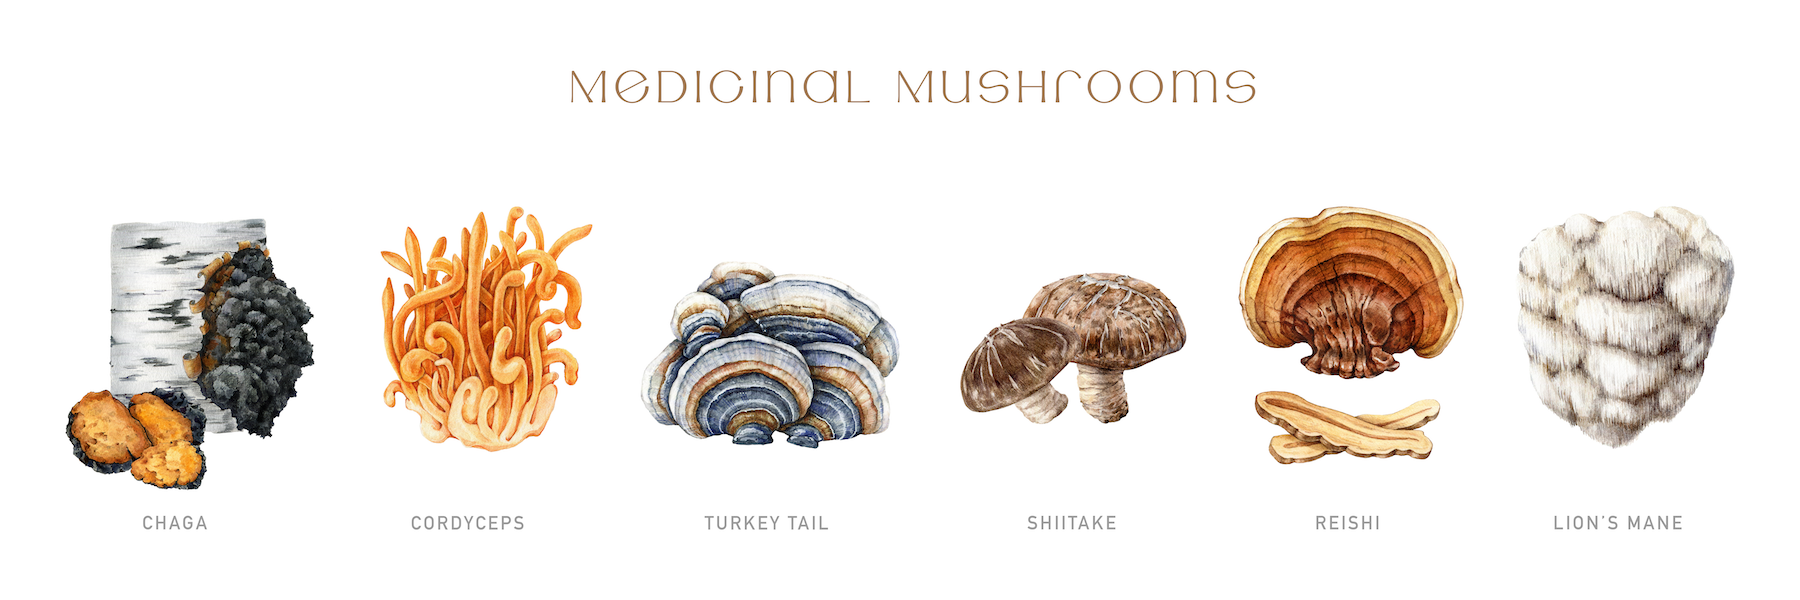 AdobeStock_Medicinal mushrooms-1800